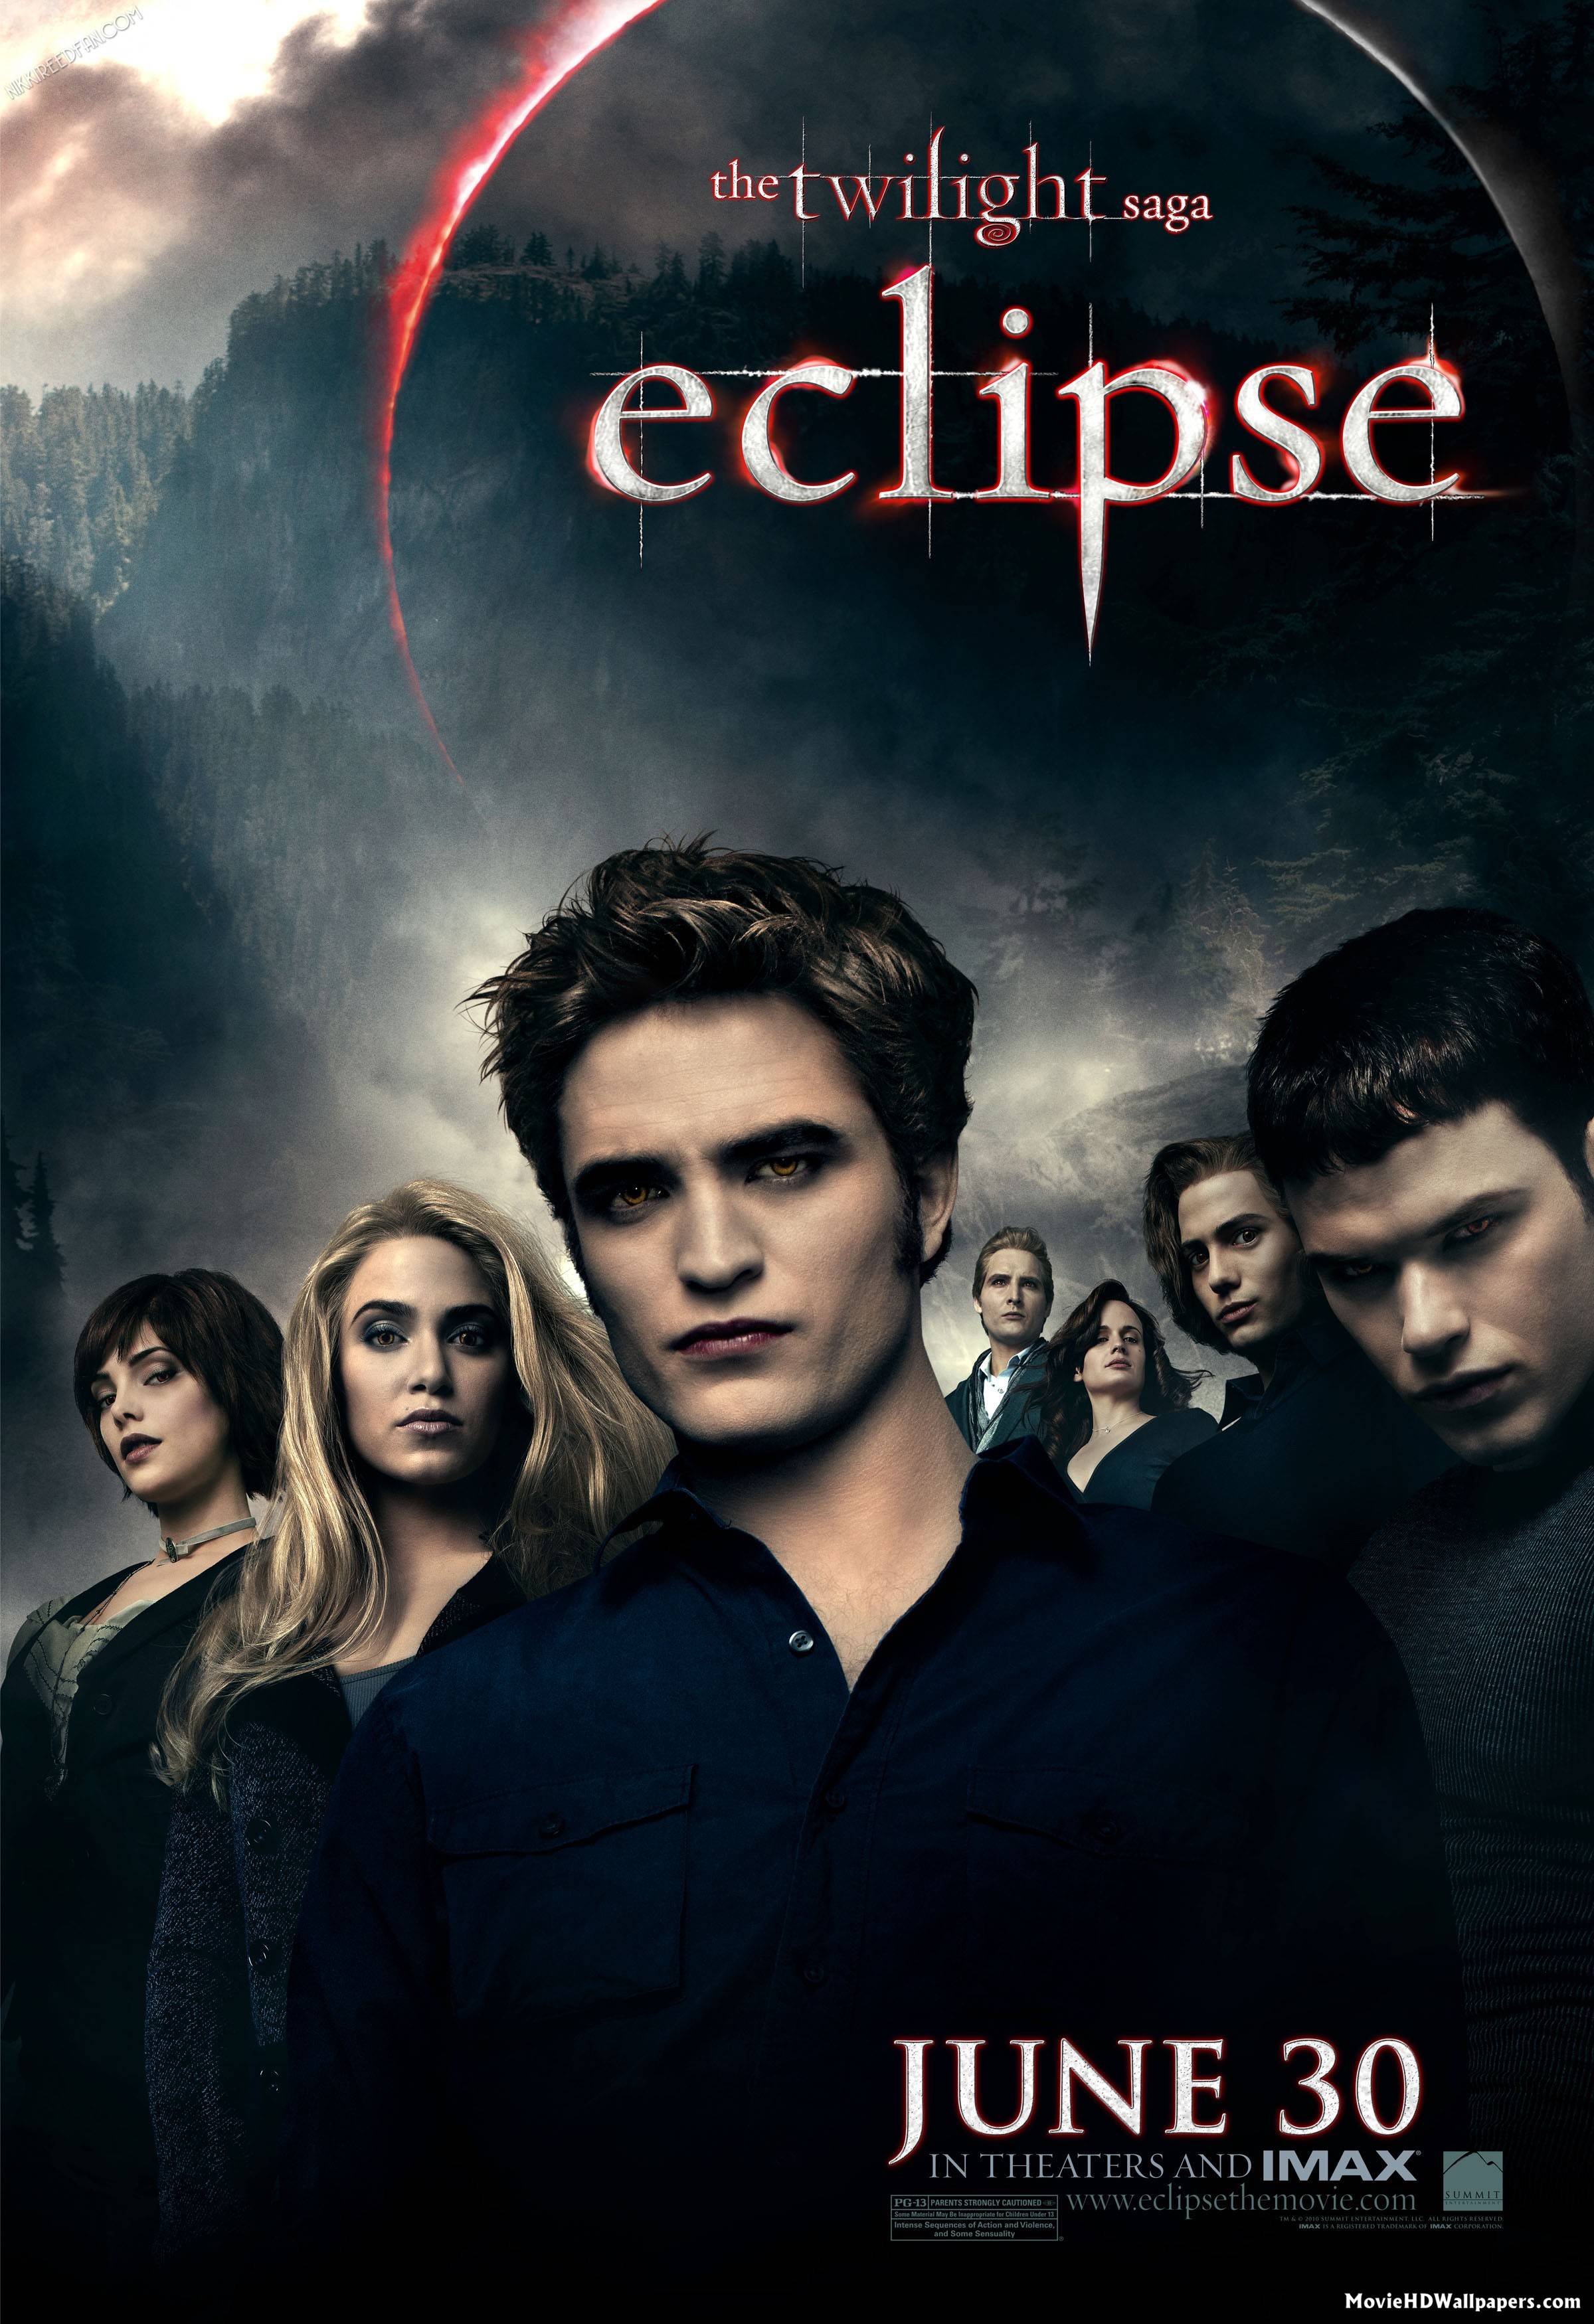 Twilight Saga Eclipse 2010 Poster - HD Wallpaper 